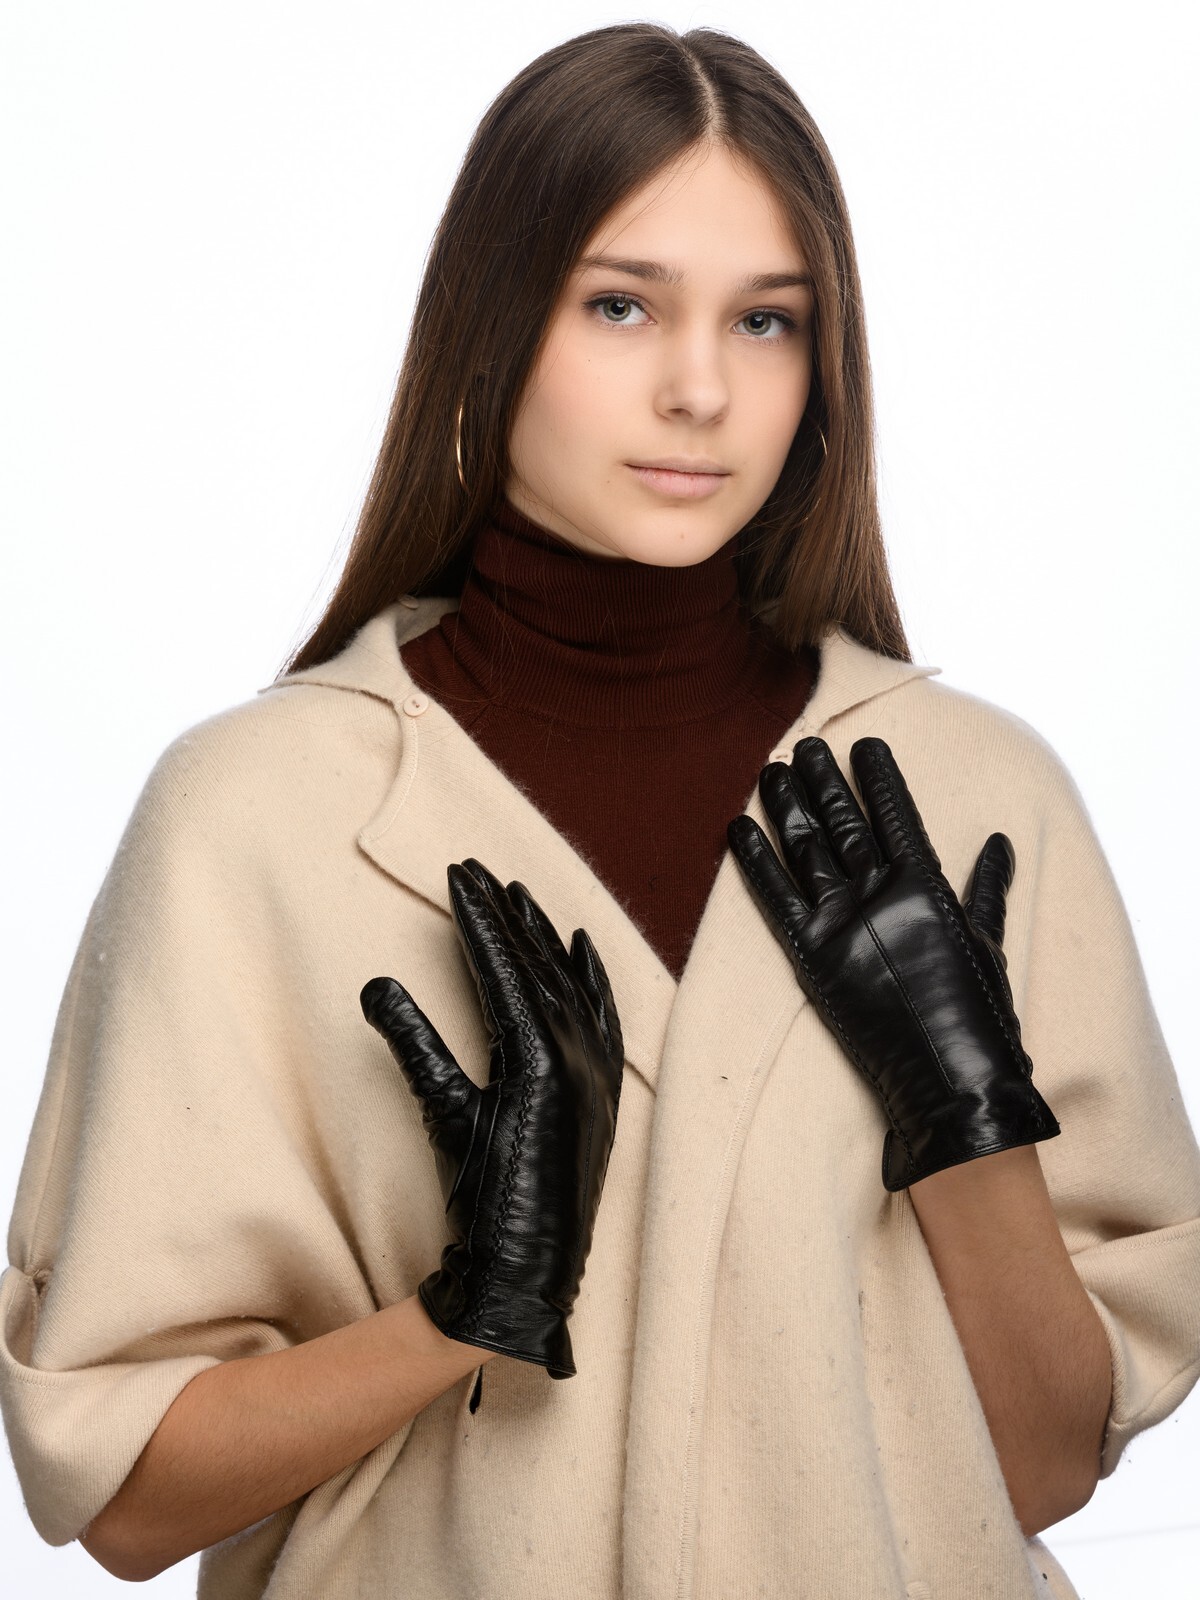 AGATTI перчатки Pitas ln0502zs. Pitas перчатки с манжетой. Aidini перчатки женские 1295-666-335. Перчатки pitas